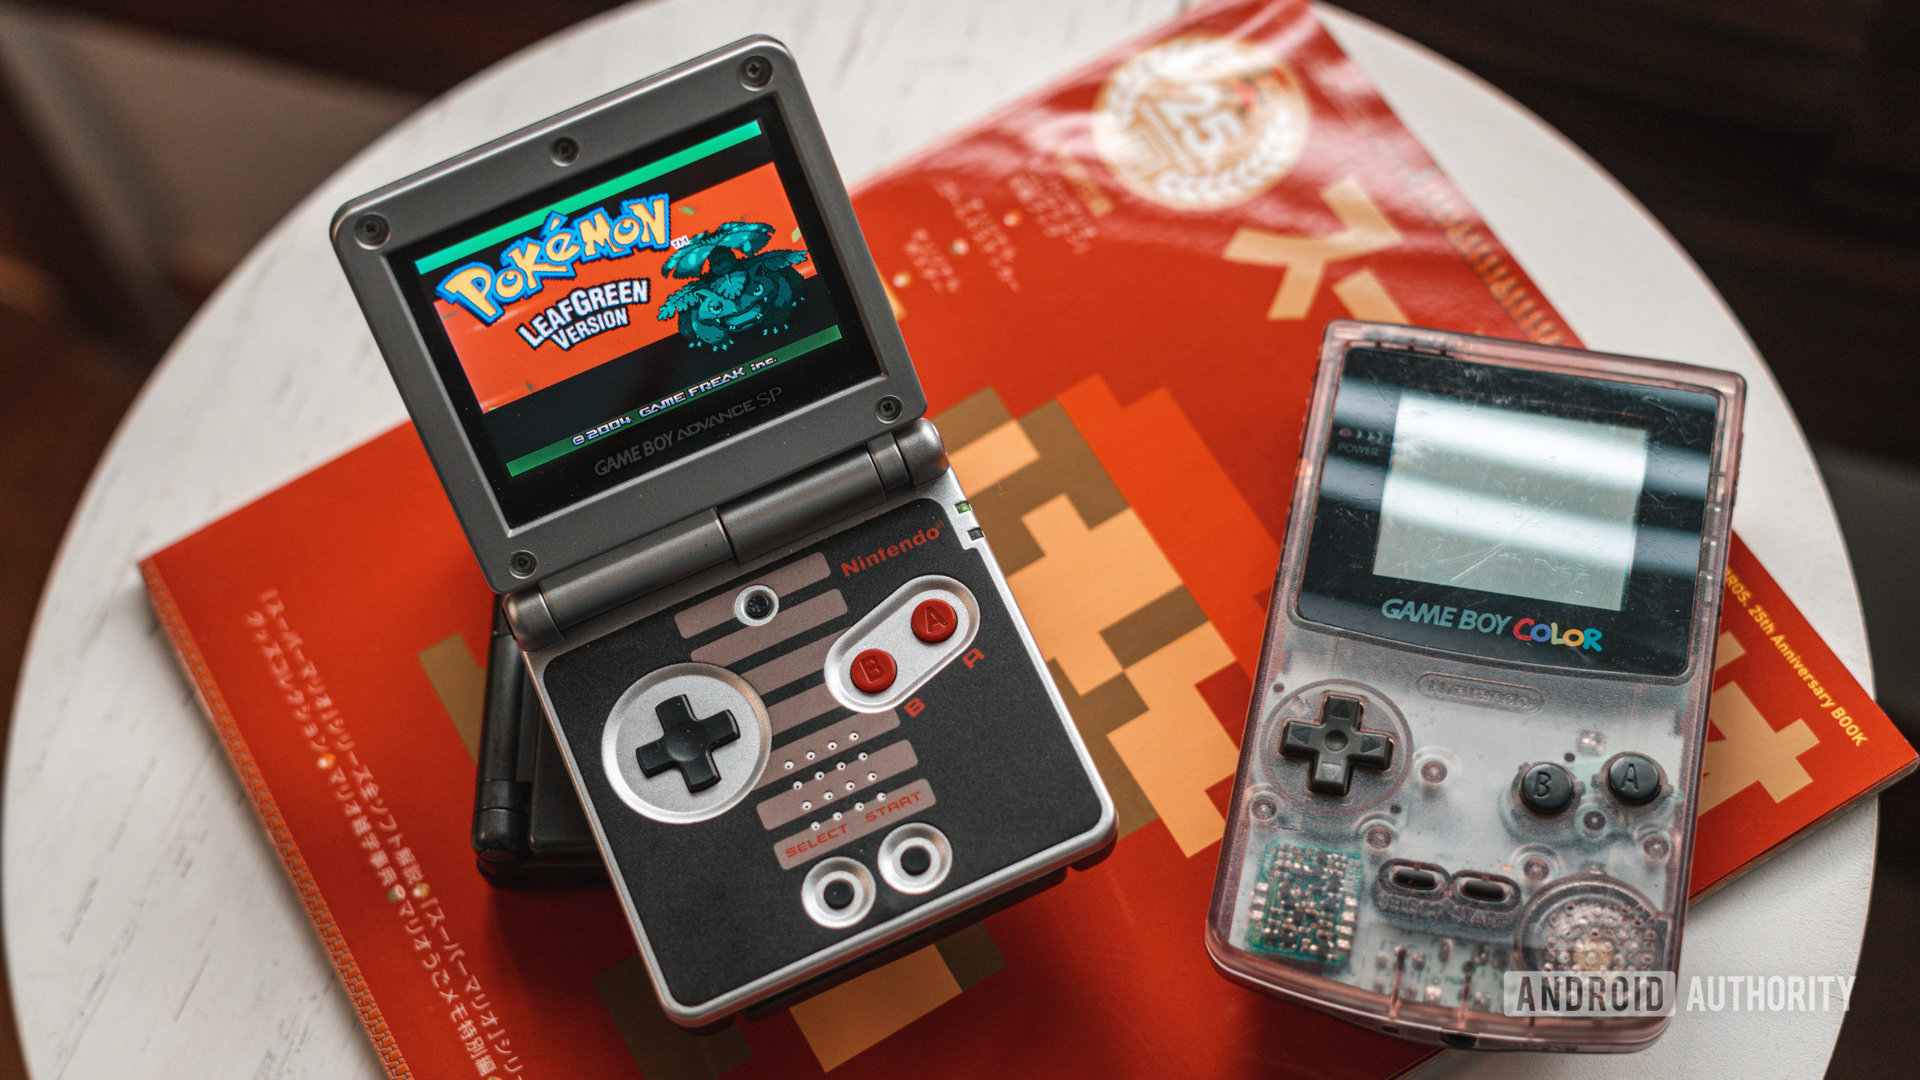 Game Boy Advance SP with Pokemon